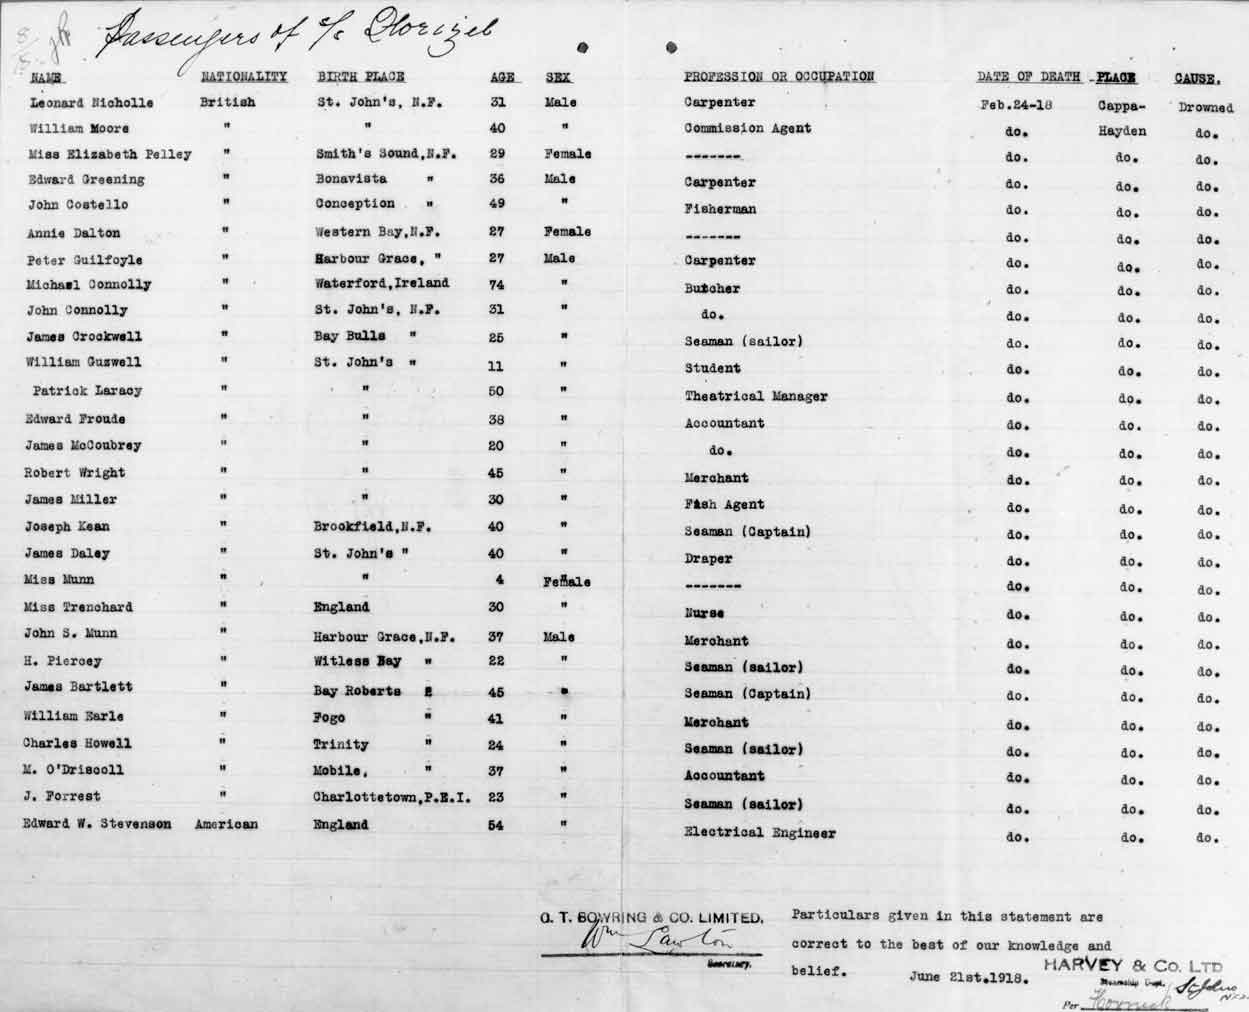 List of passengers on the Florizel (O.N.127957) certified by O.T. Boering & Co. Ltd. and by Harvey & Co. Ltd. 1918/06/21; list of the deceased members of the crew of the Florizel certified by O.T. Bowring & Co. Ltd. 1918/02/24 - La liste de passagers sur le Florizel (O.N.127957) a certifi par O.T. Boering et Co. Ltd et par Harvey et Co. Ltd. 1918/06/21 ; la liste des membres dcds du servir d' quipier du Florizel a certifi par O.T. Bowring et Co. Ltd. 1918/02/24.